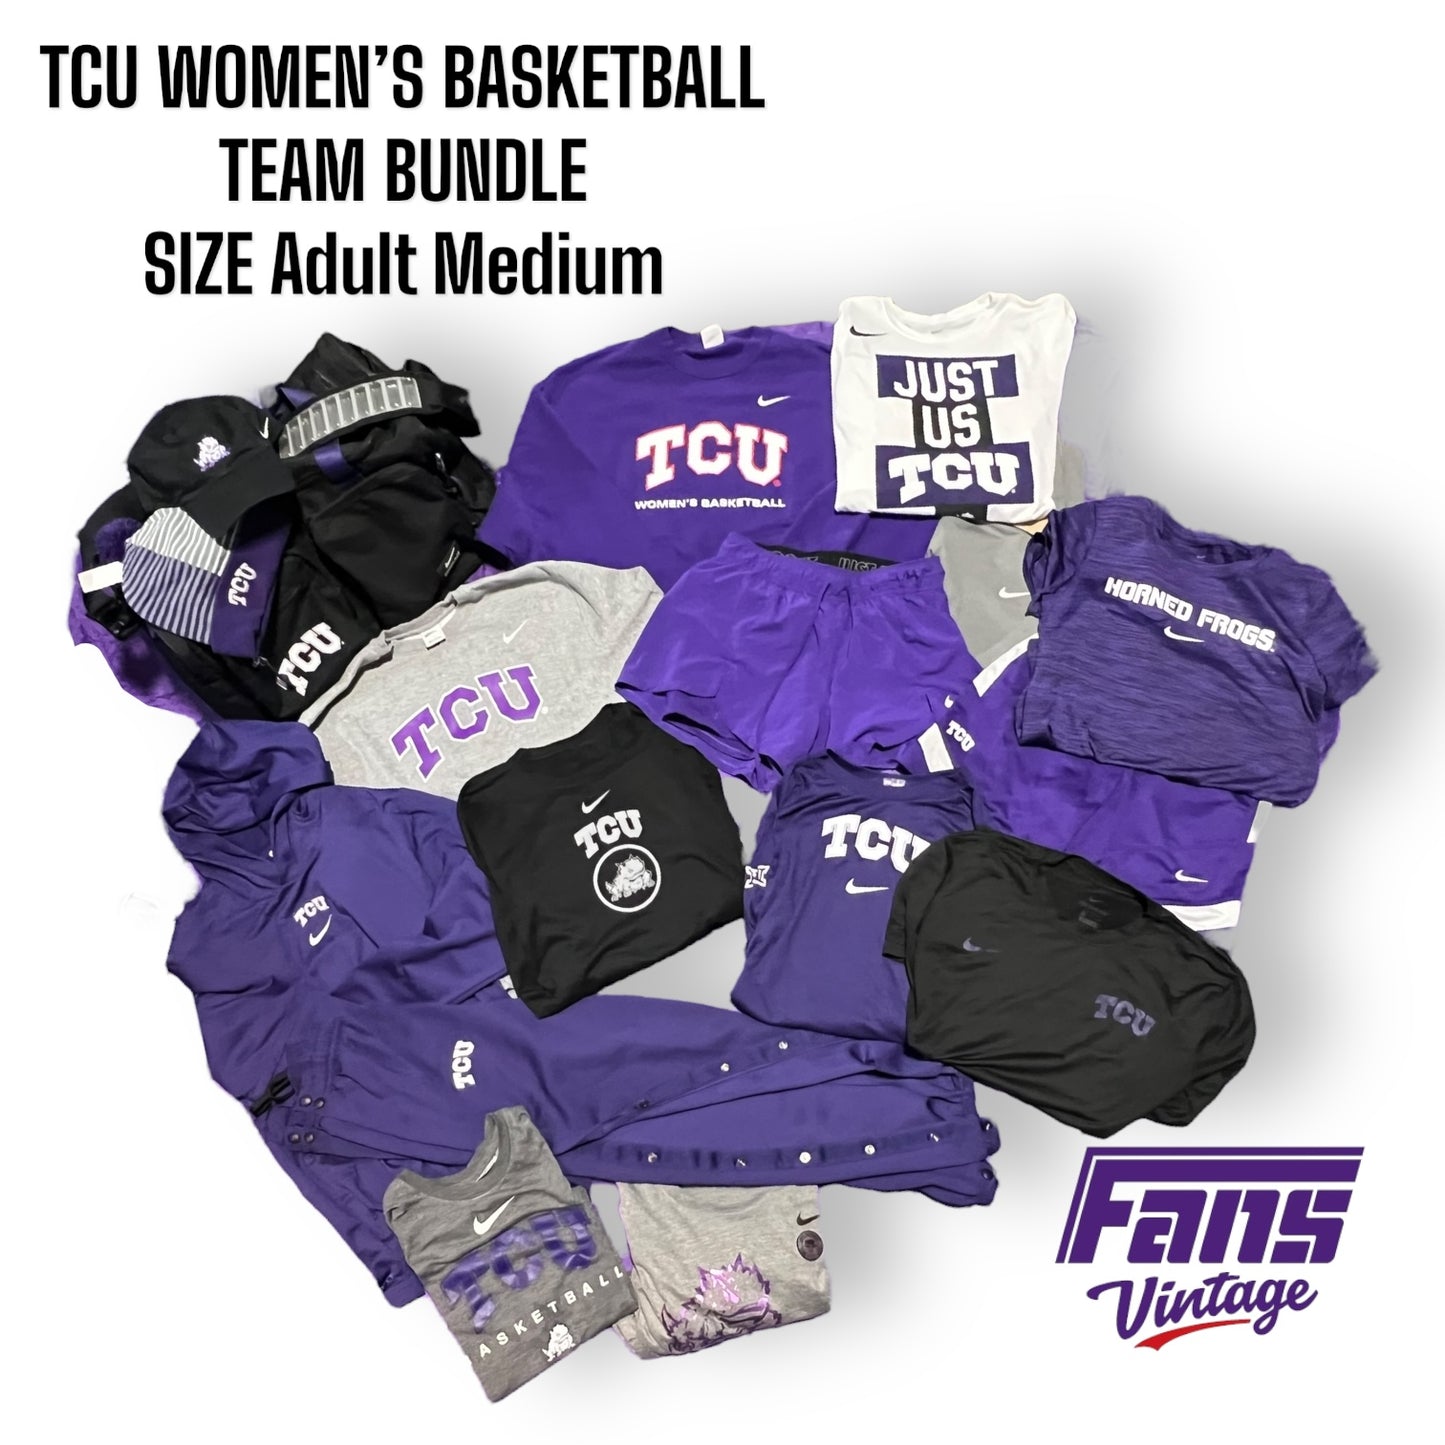 TCU Women’s Basketball Team Exclusive Bundle #1 - Size Adult Medium / Wm Large